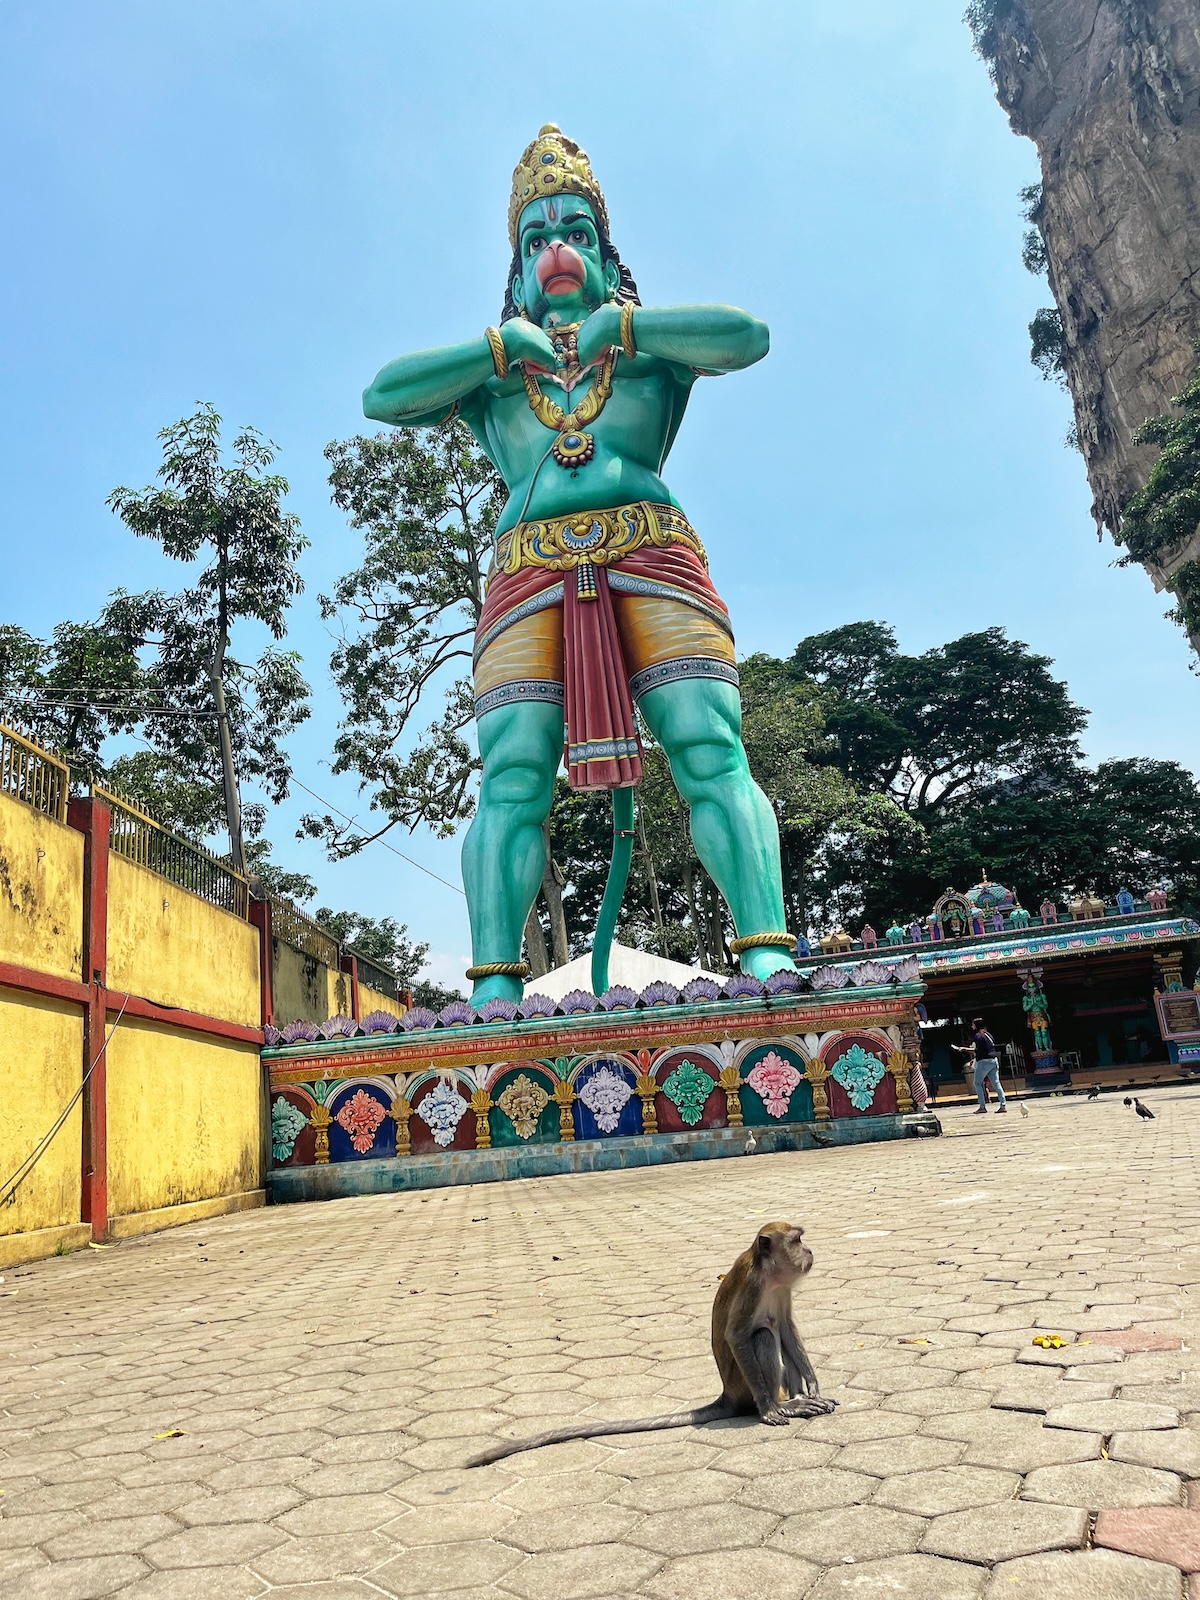 A small monkey looks onward below a giant statue of a Hindu monkey God in Kuala Lumpur